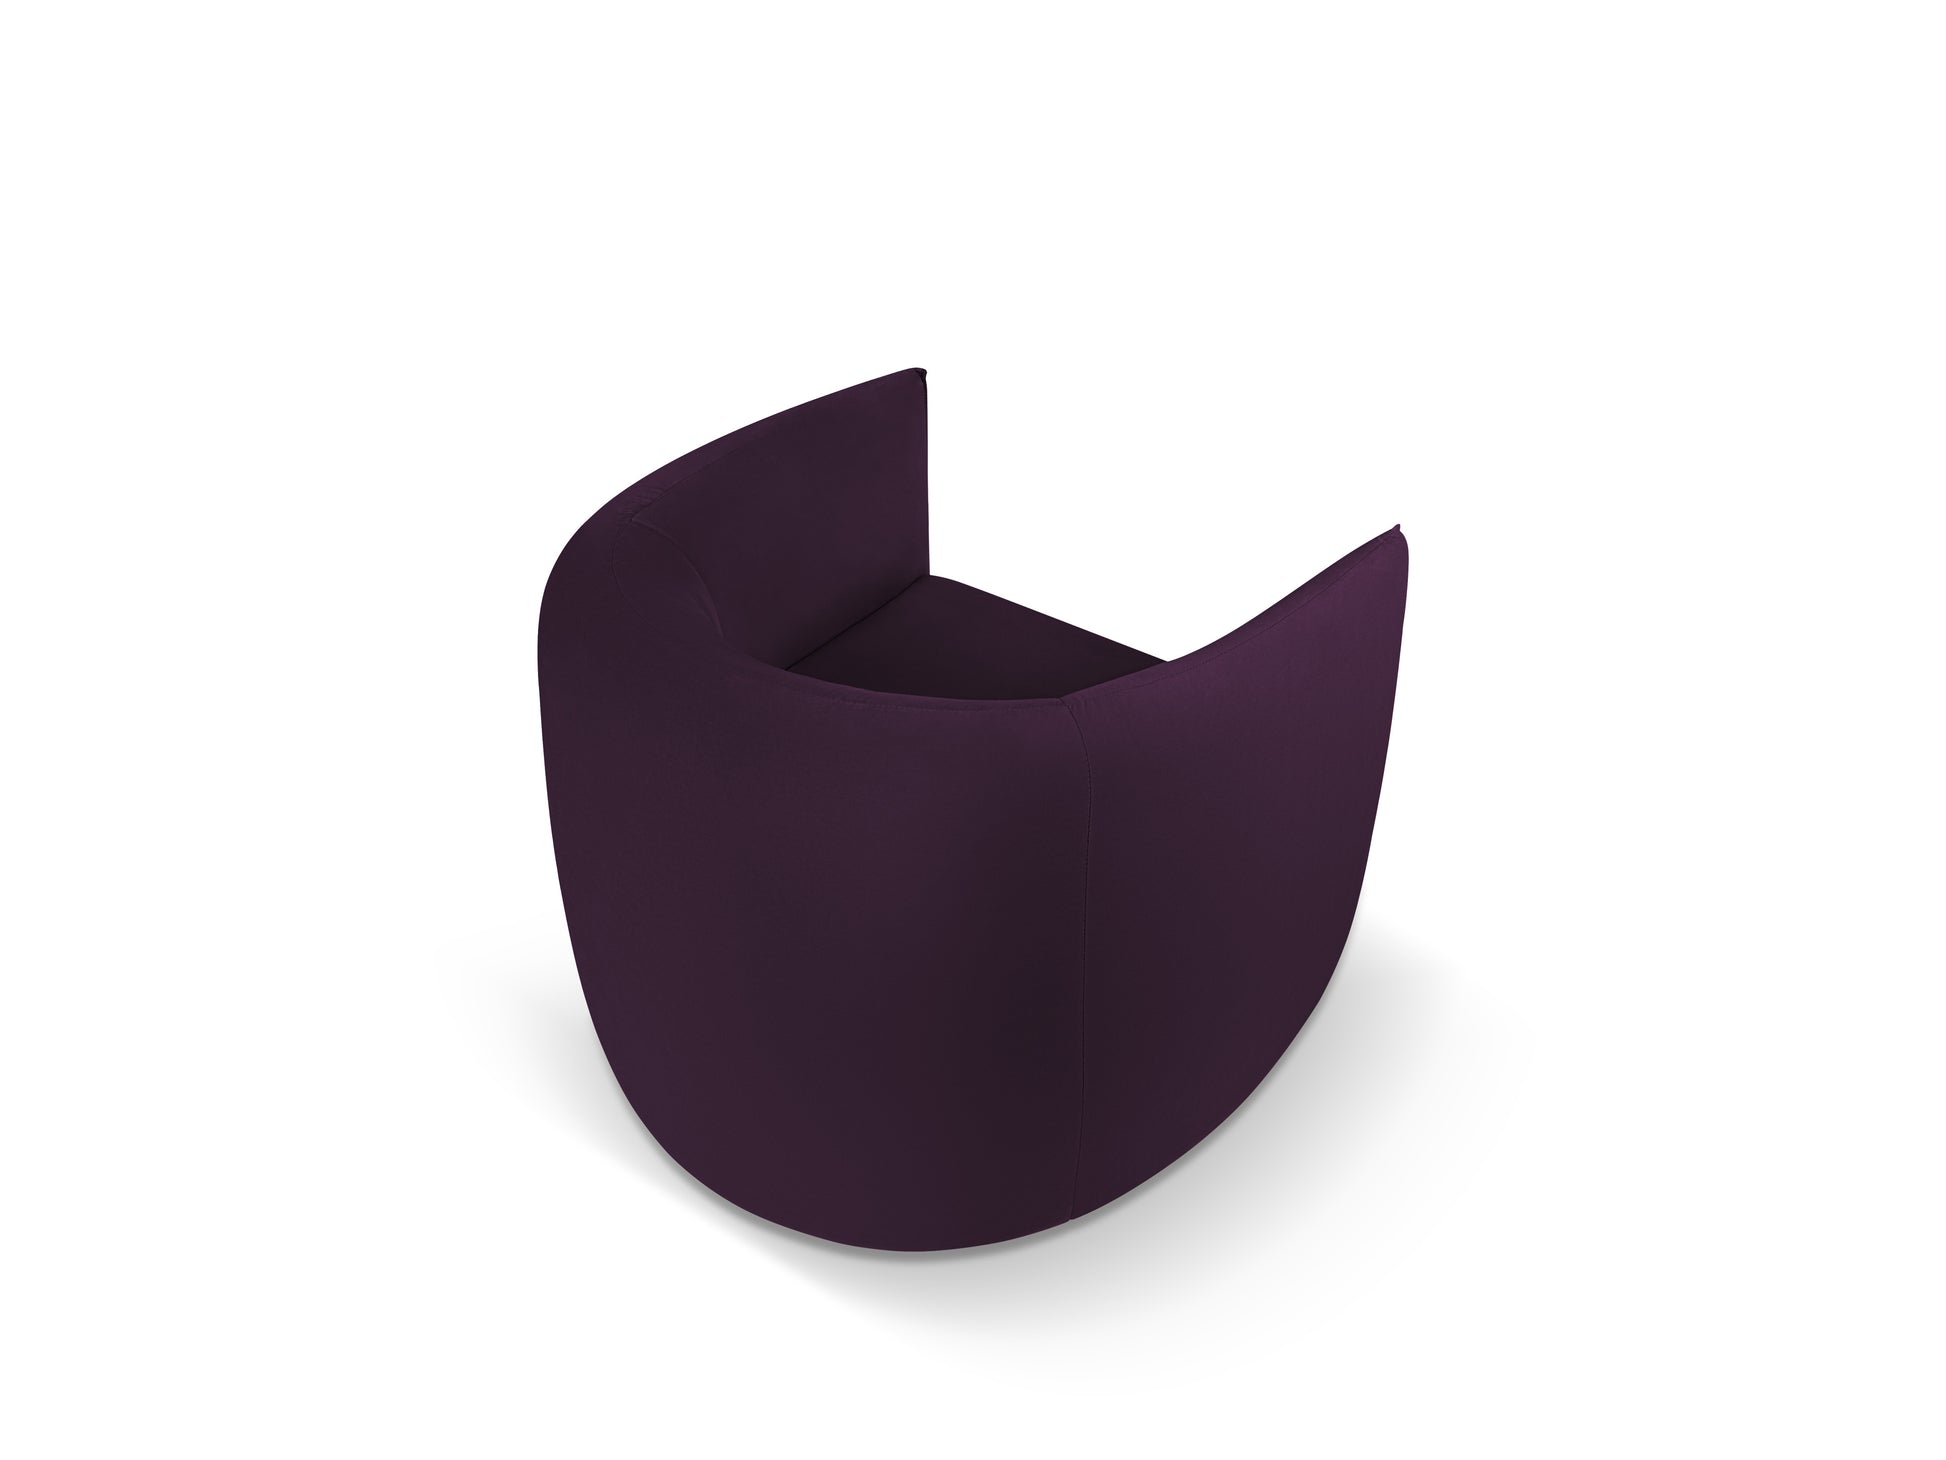 Atzveltnes krēsls Cosmopolitan Design Pelago 88x88x72 cm violets - N1 Home